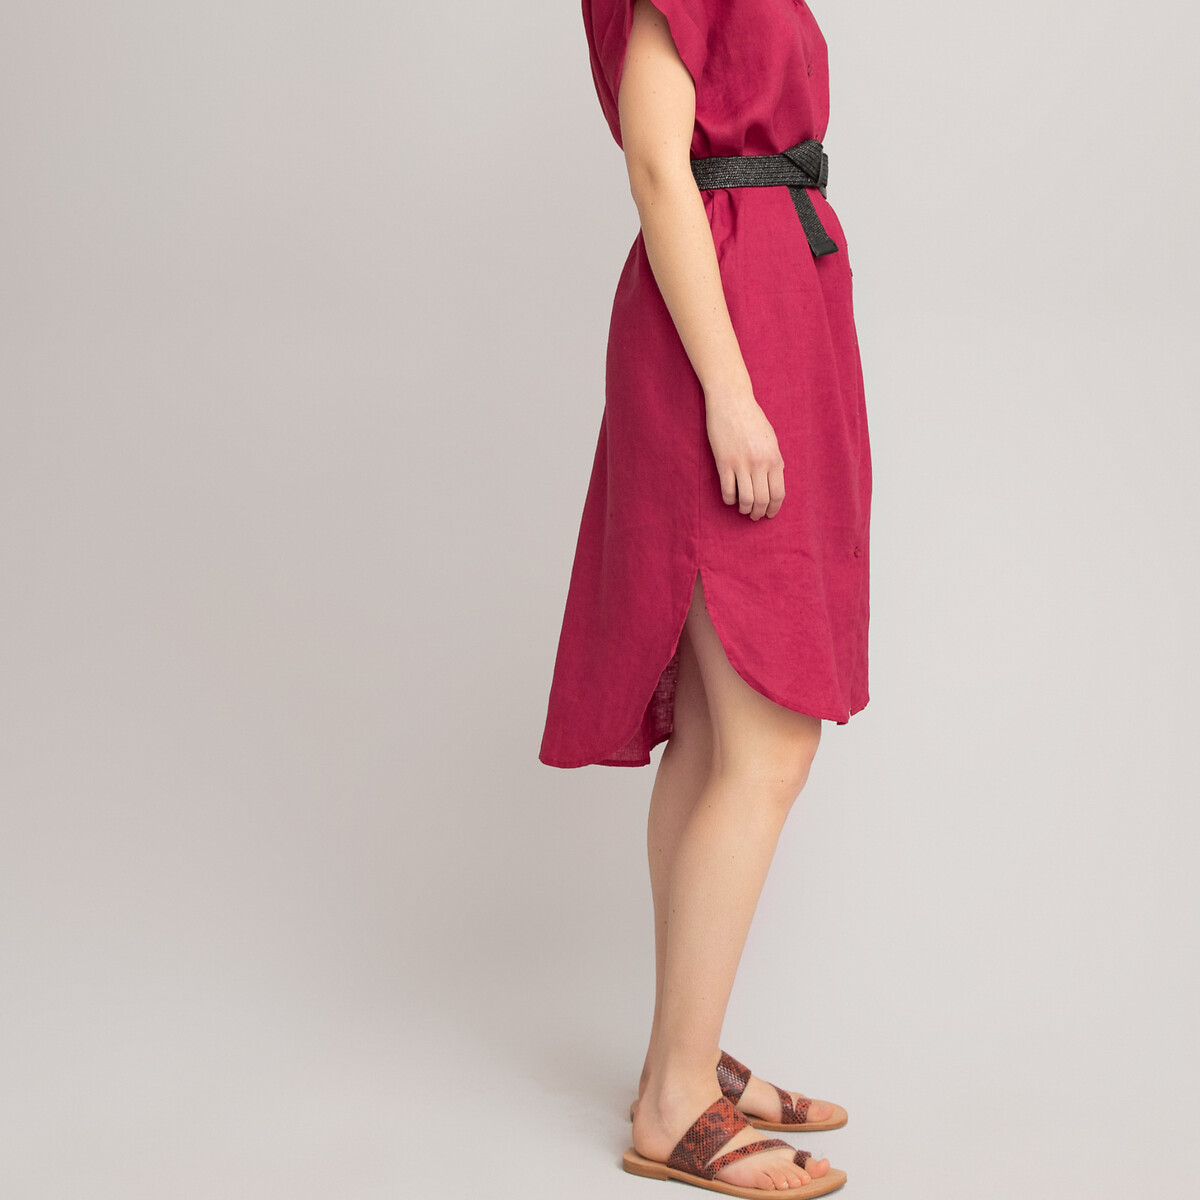 Платье-рубашка LaRedoute С короткими рукавами из льна 46 (FR) - 52 (RUS) розовый, размер 46 (FR) - 52 (RUS) С короткими рукавами из льна 46 (FR) - 52 (RUS) розовый - фото 3